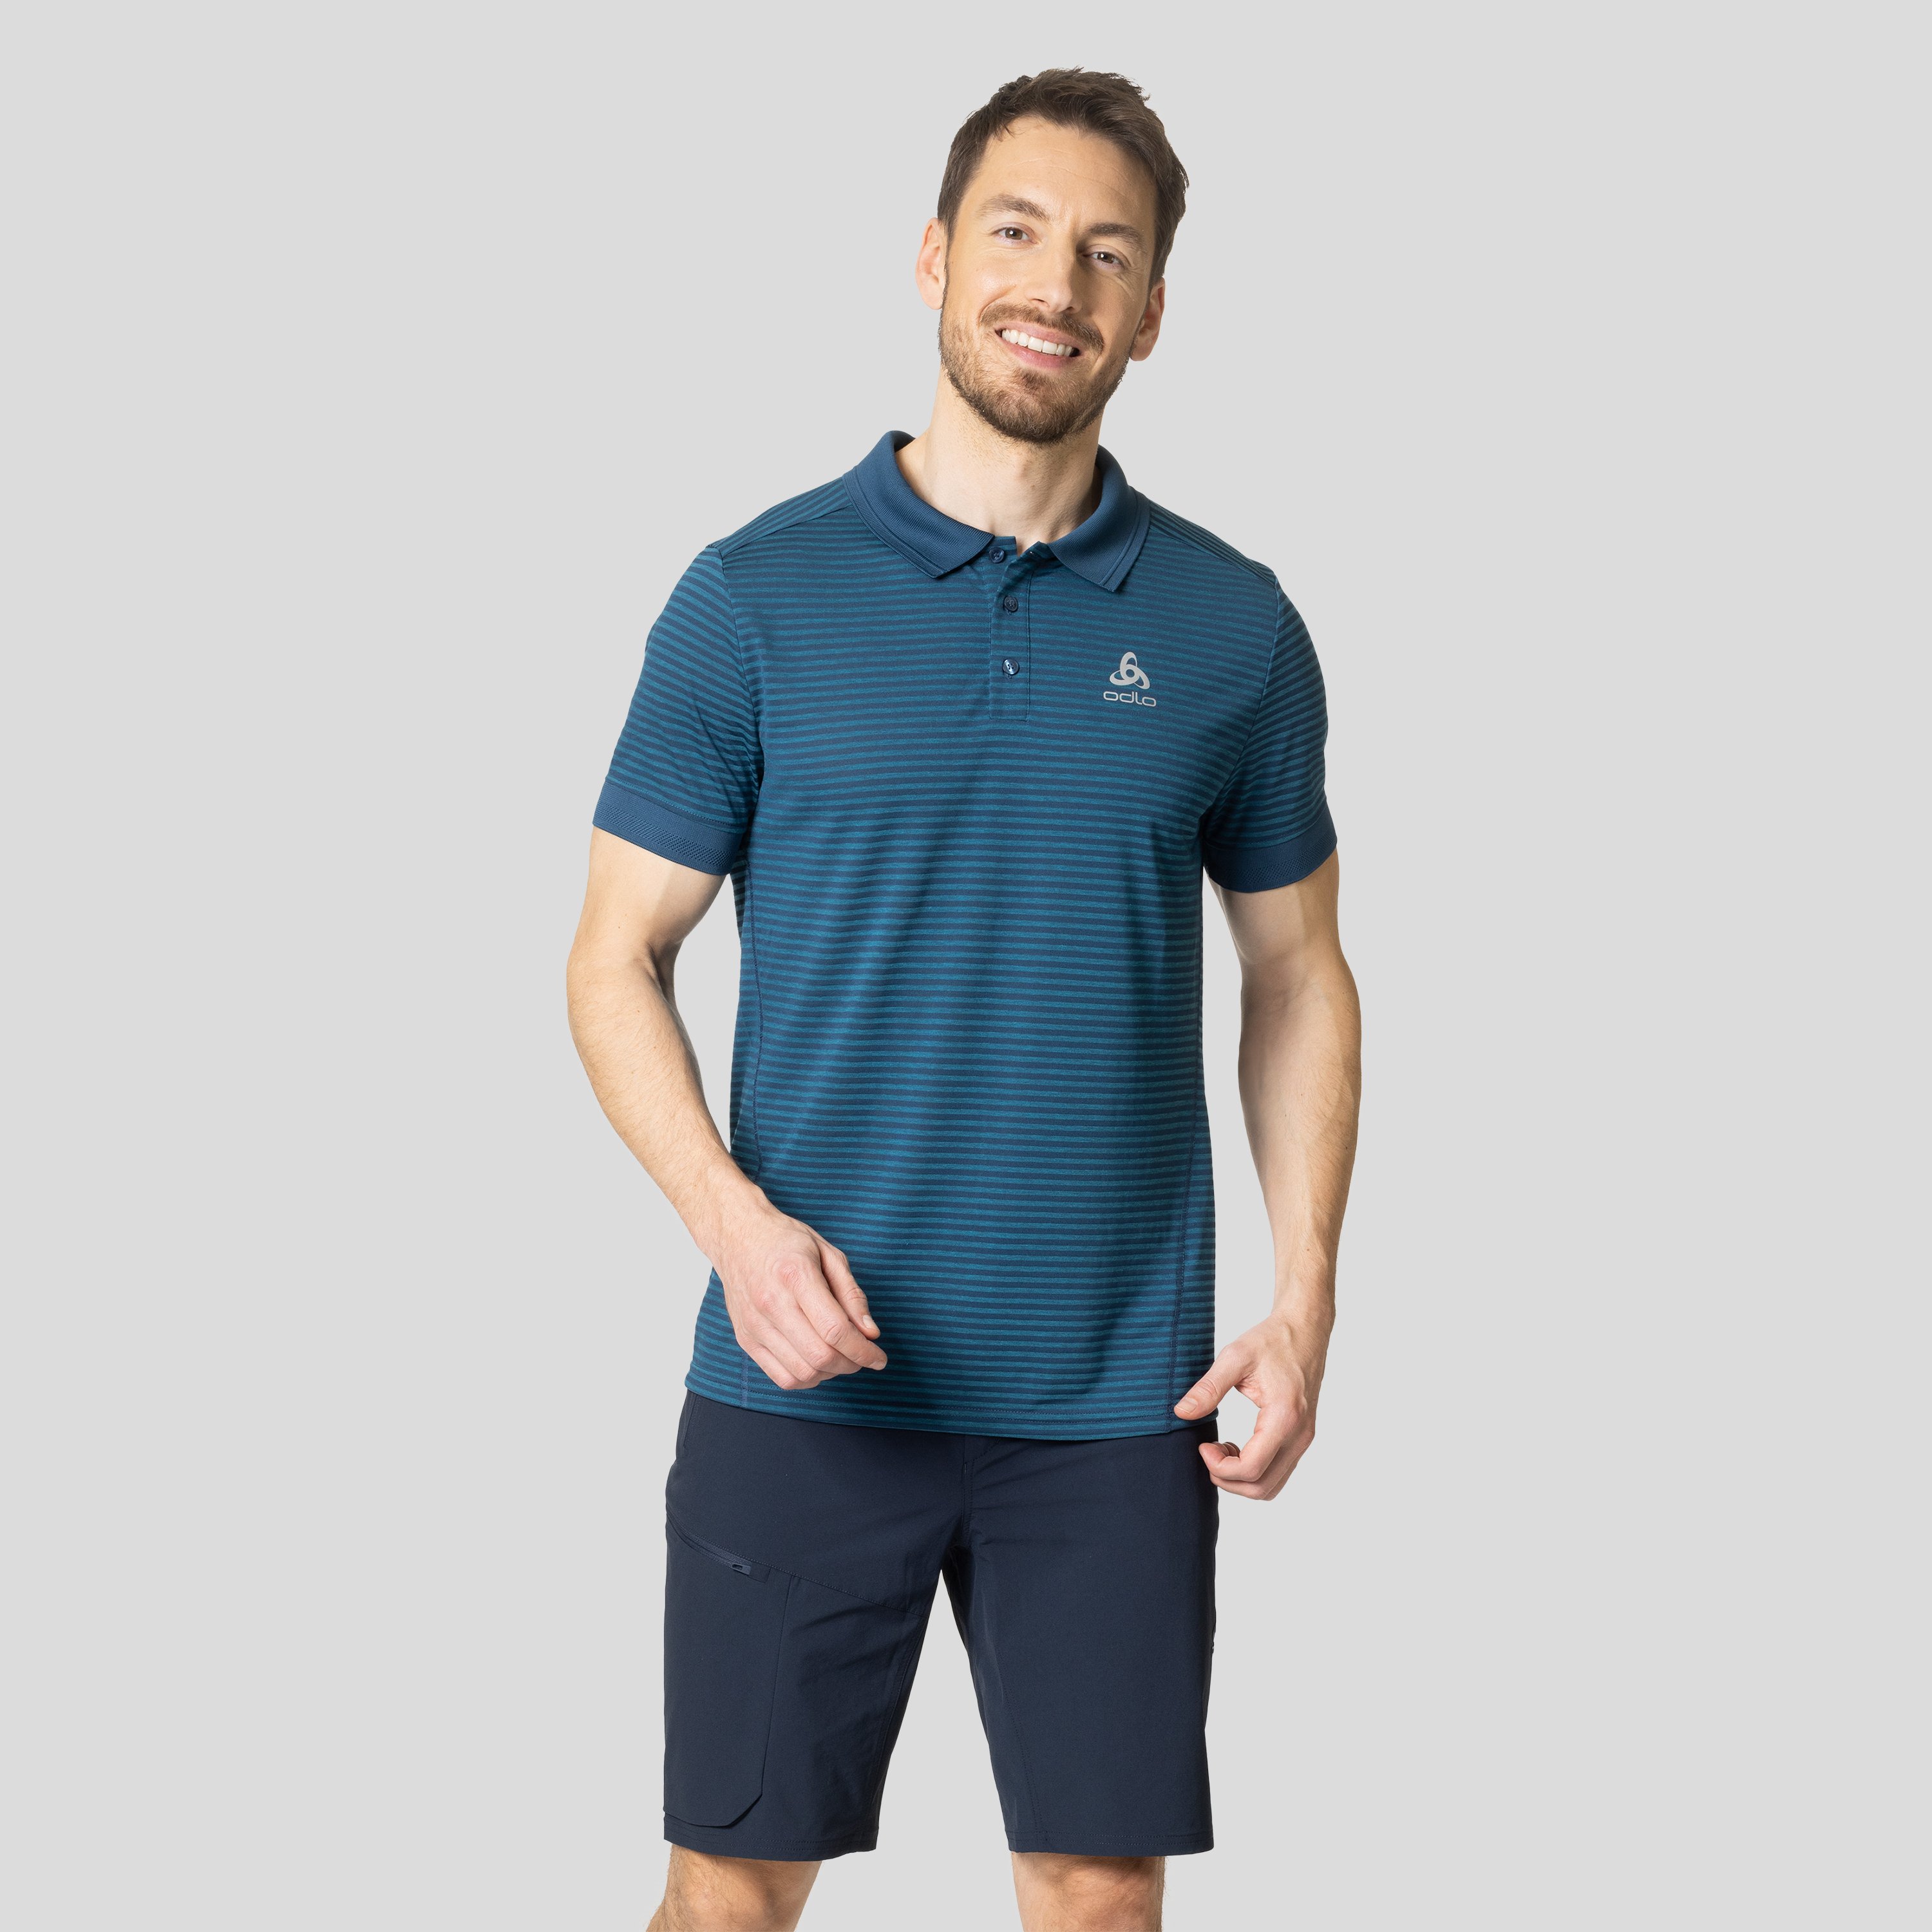 ODLO Nikko Dry Poloshirt für Herren, XL, blau